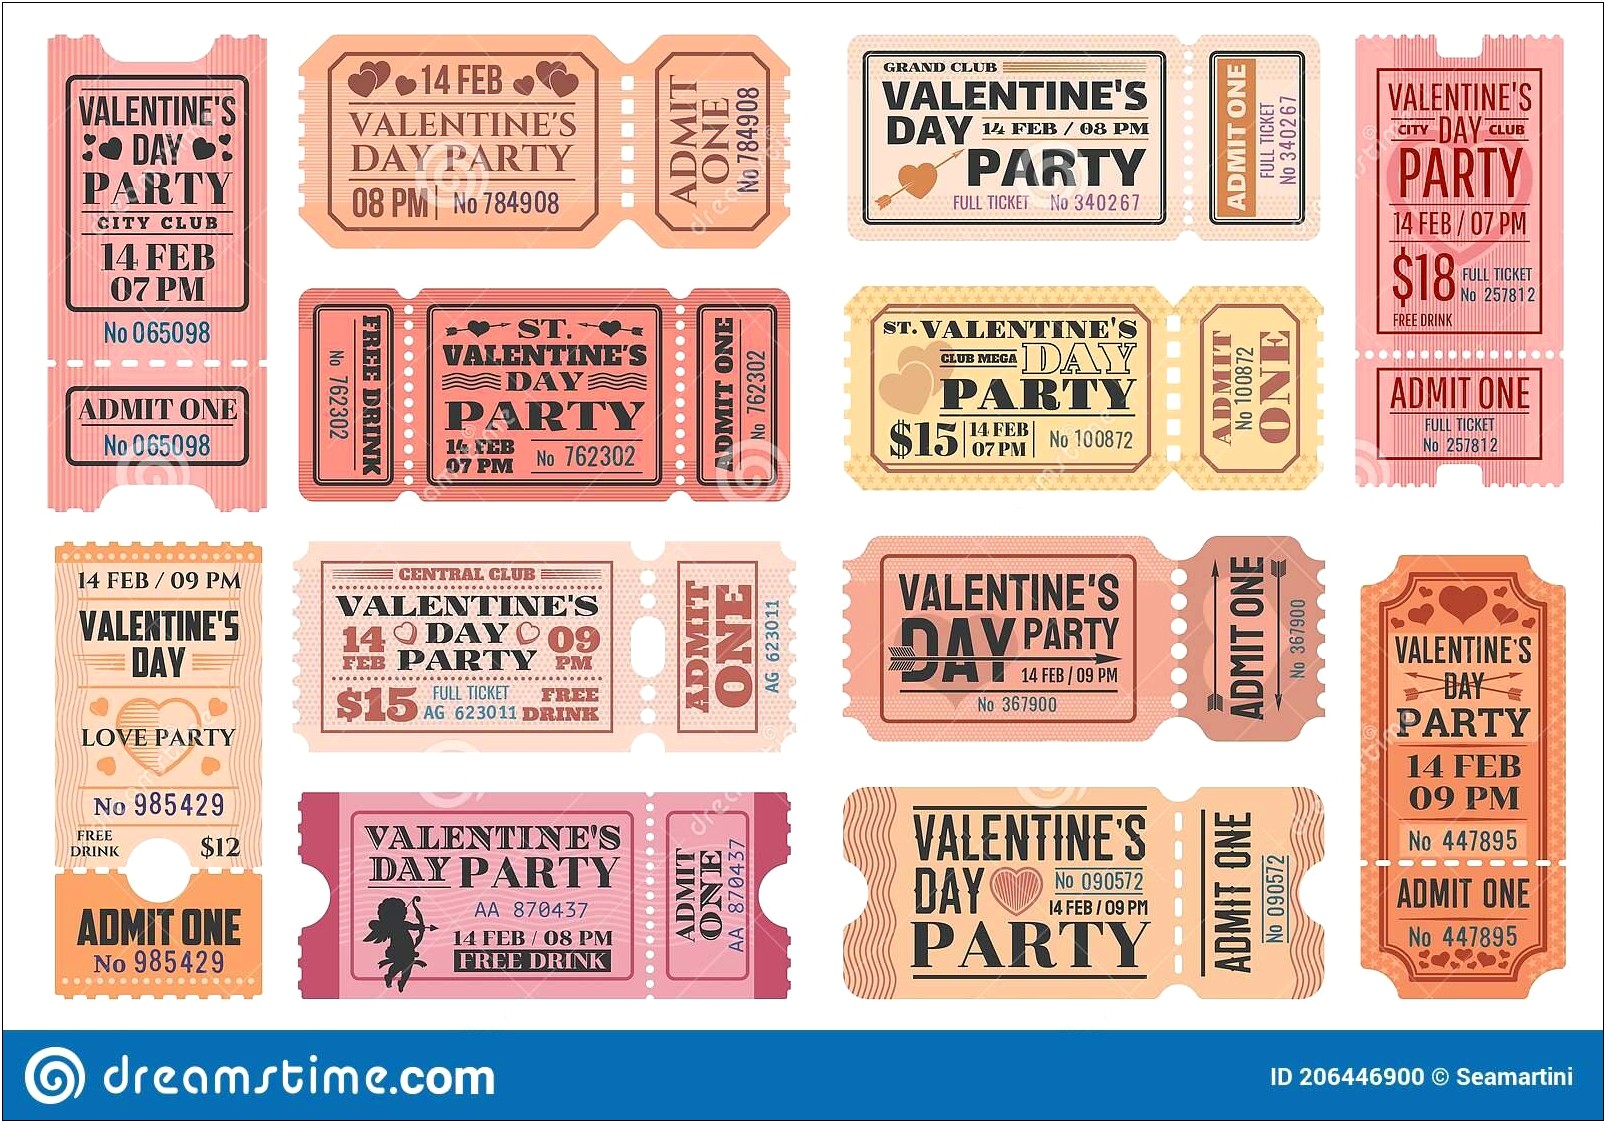 Valentine's Day Dinner Ticket Template Free